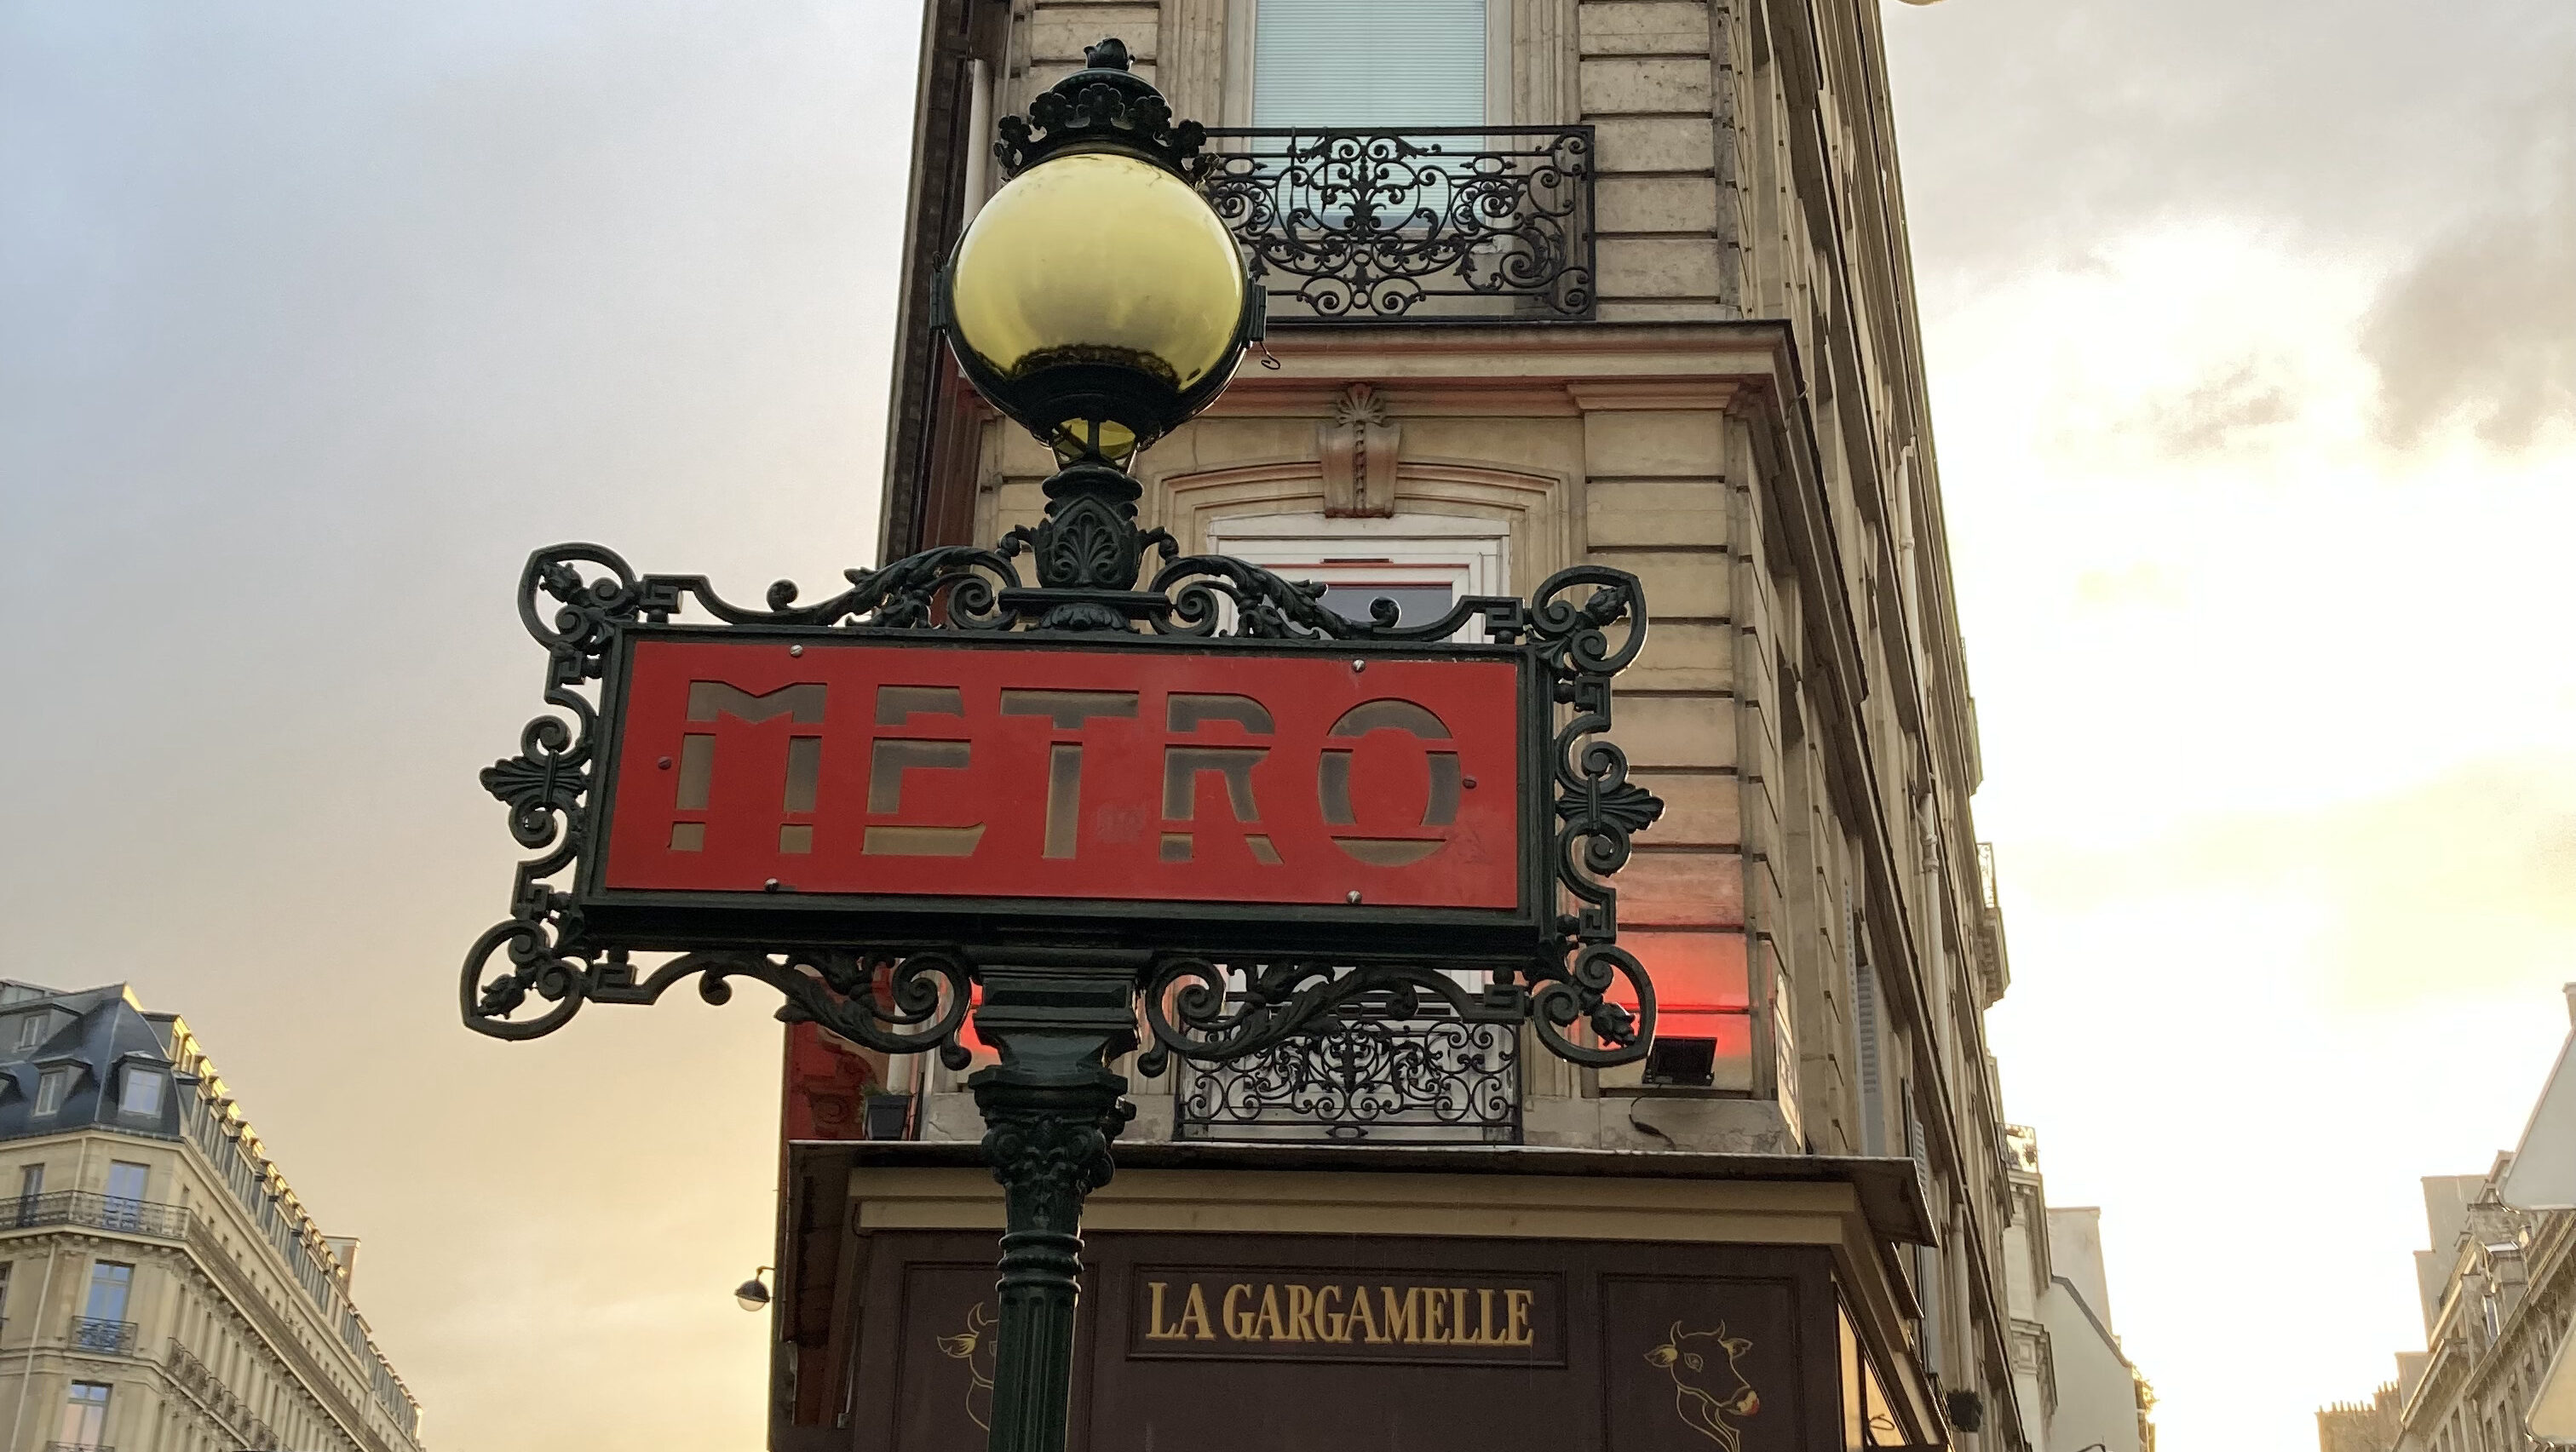 A Parisian metro sign in front of the restaurant La Gargamelle.